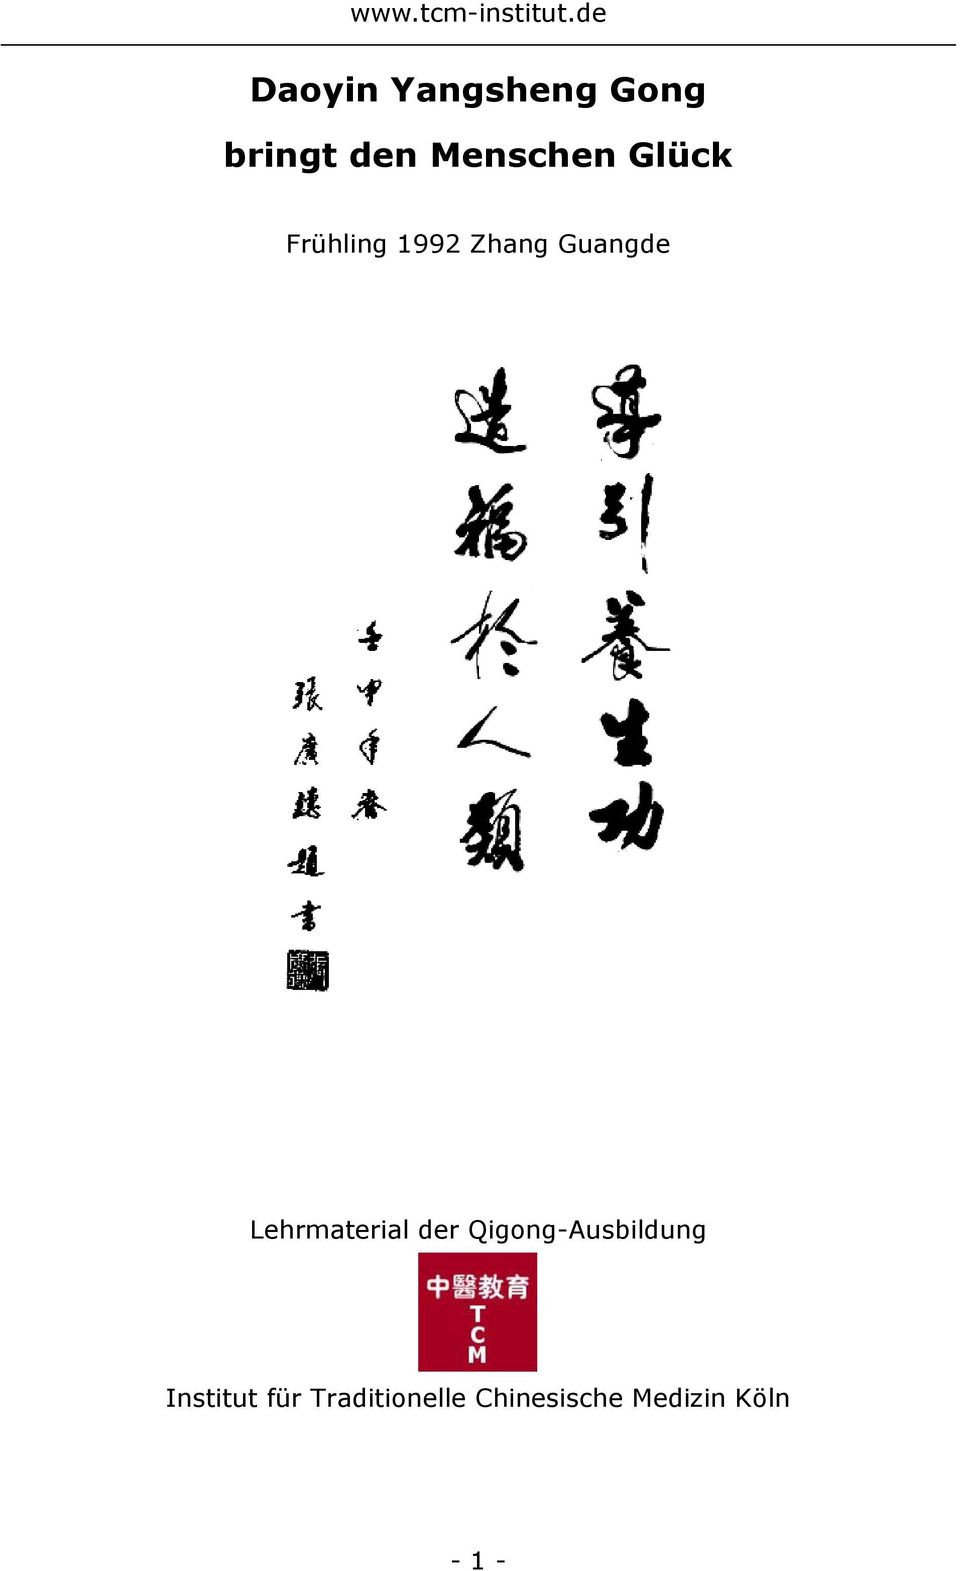 Lehrmaterial der Qigong-Ausbildung